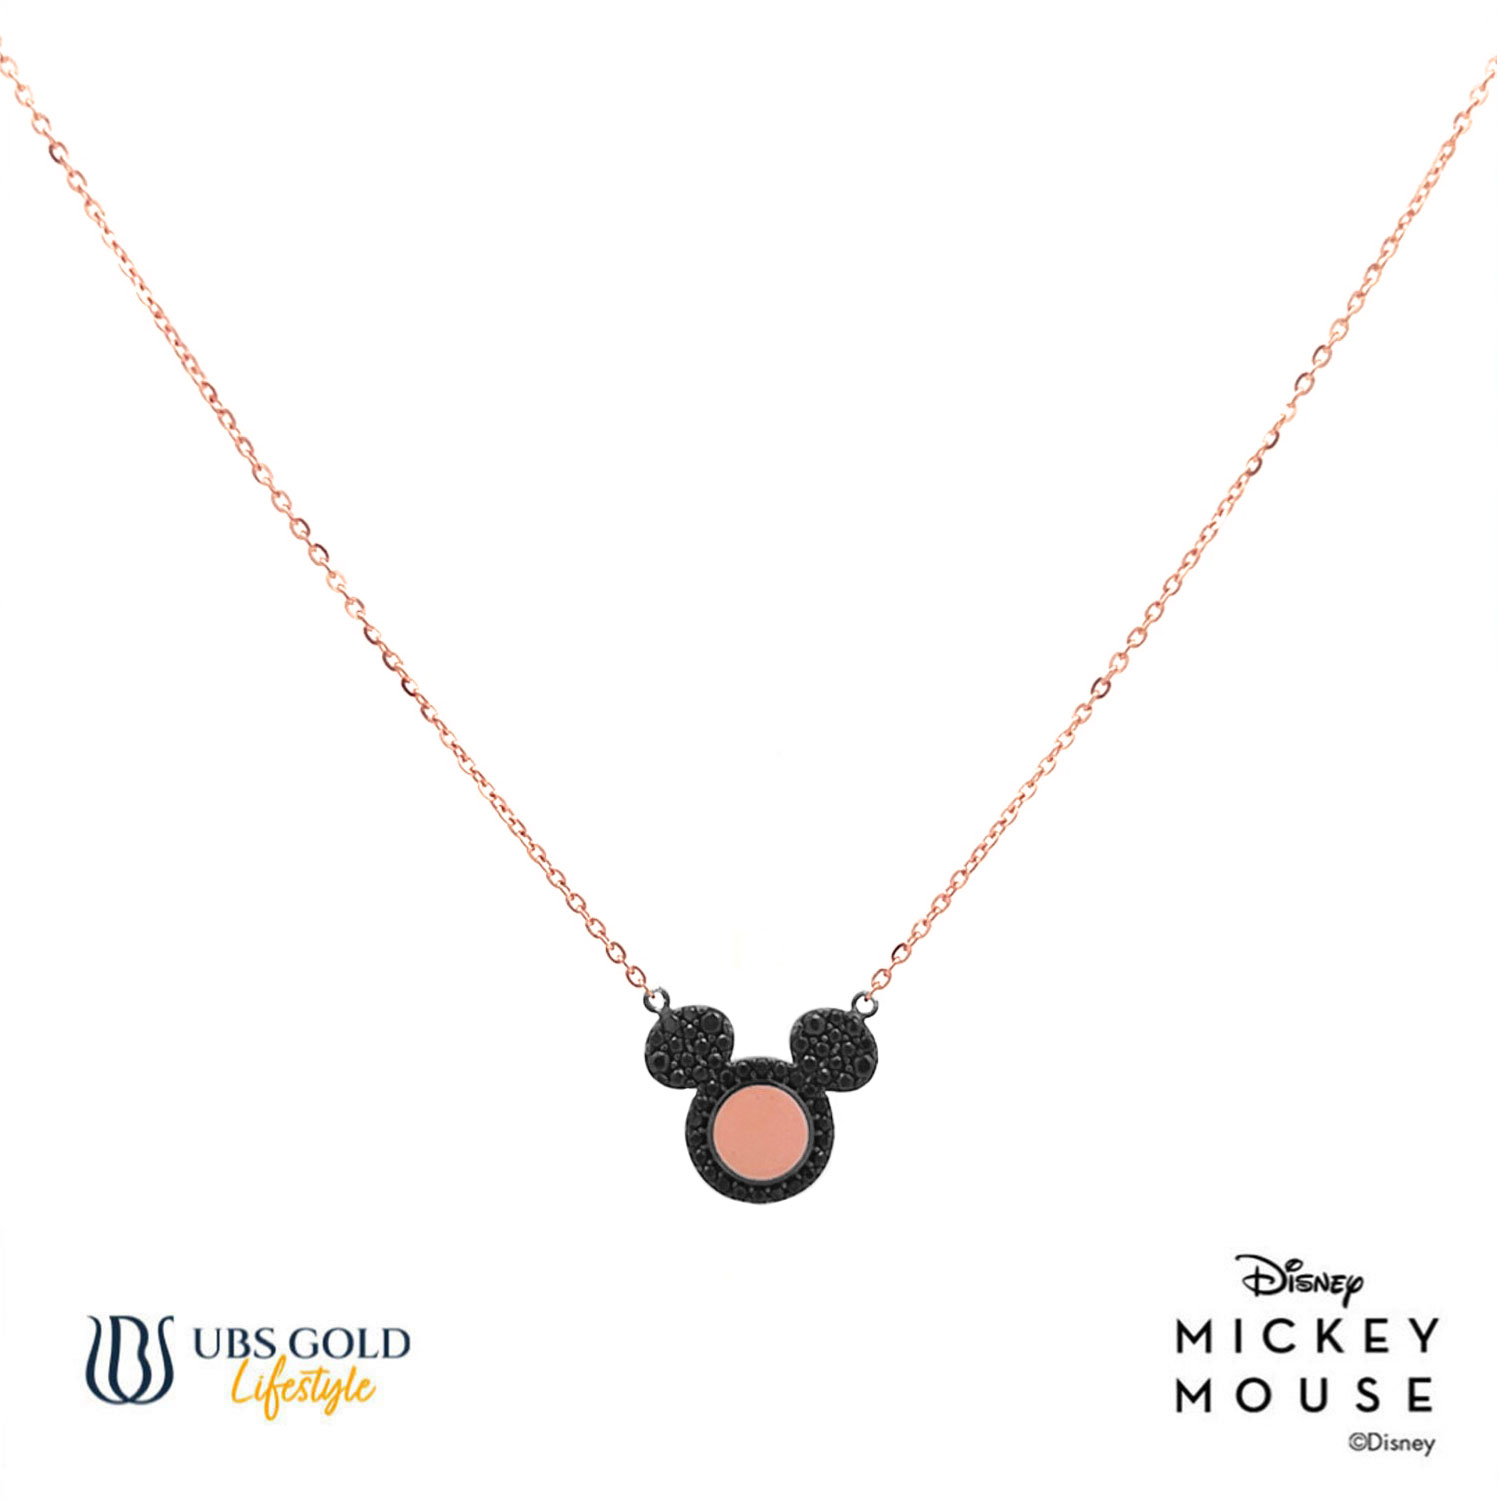 UBS Gold Kalung Emas Disney Mickey Mouse - Kky0482 - 17K